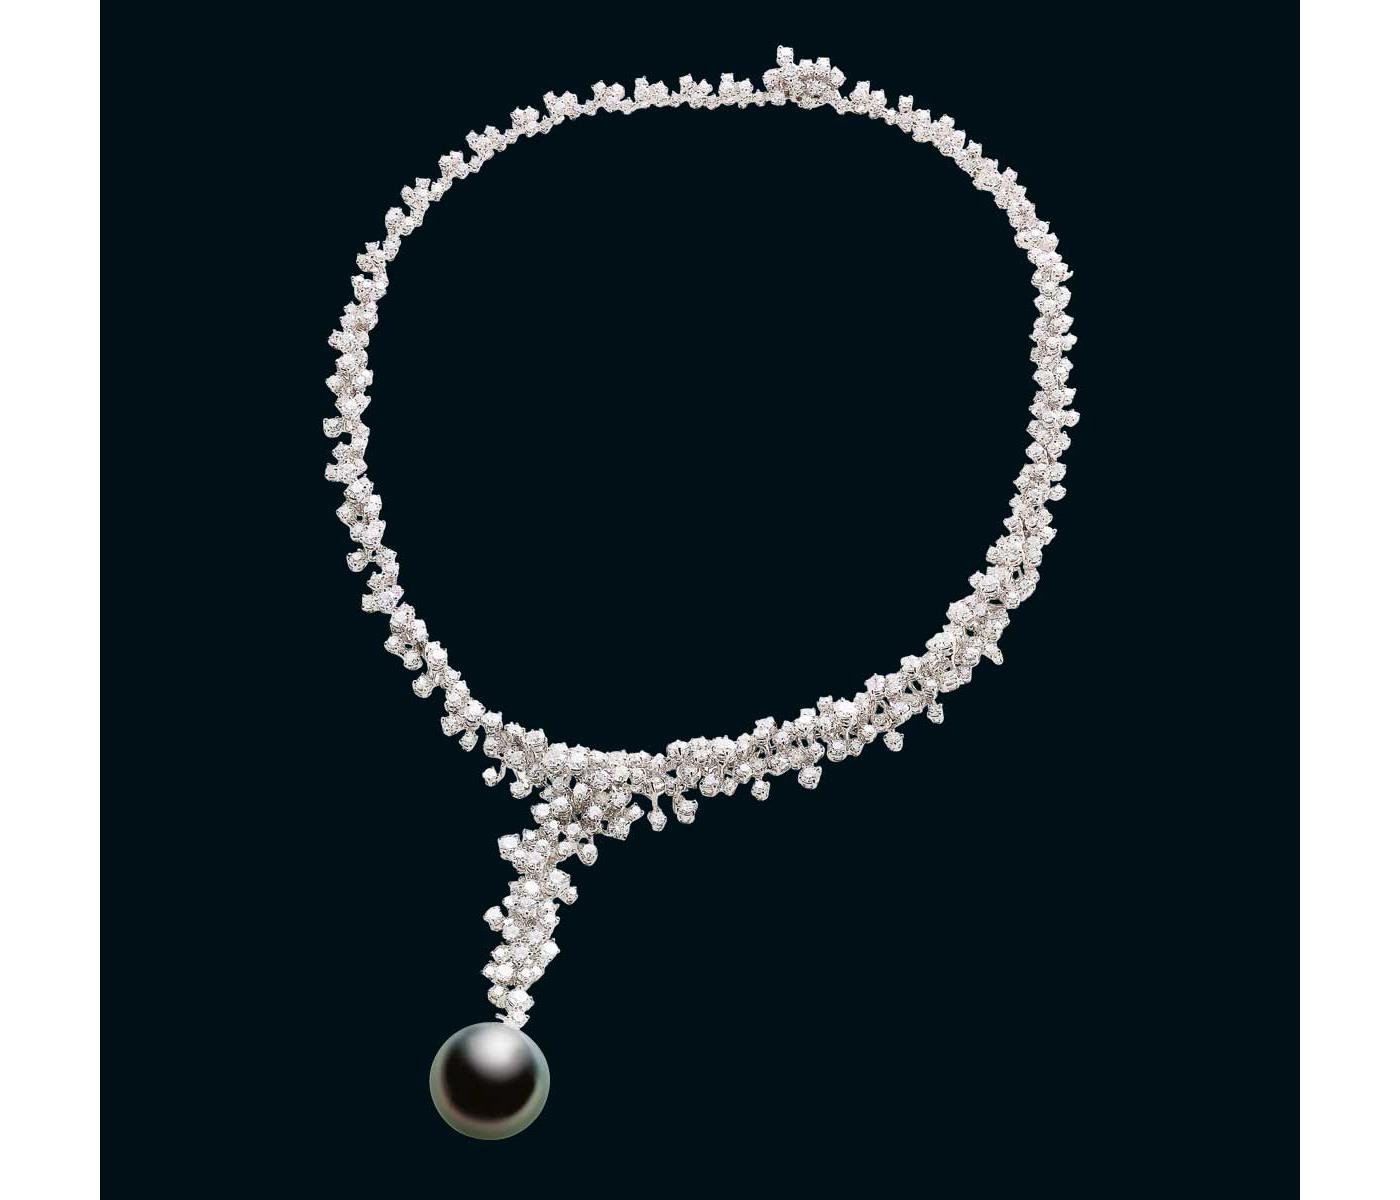 Necklace by Giovanna Broggian